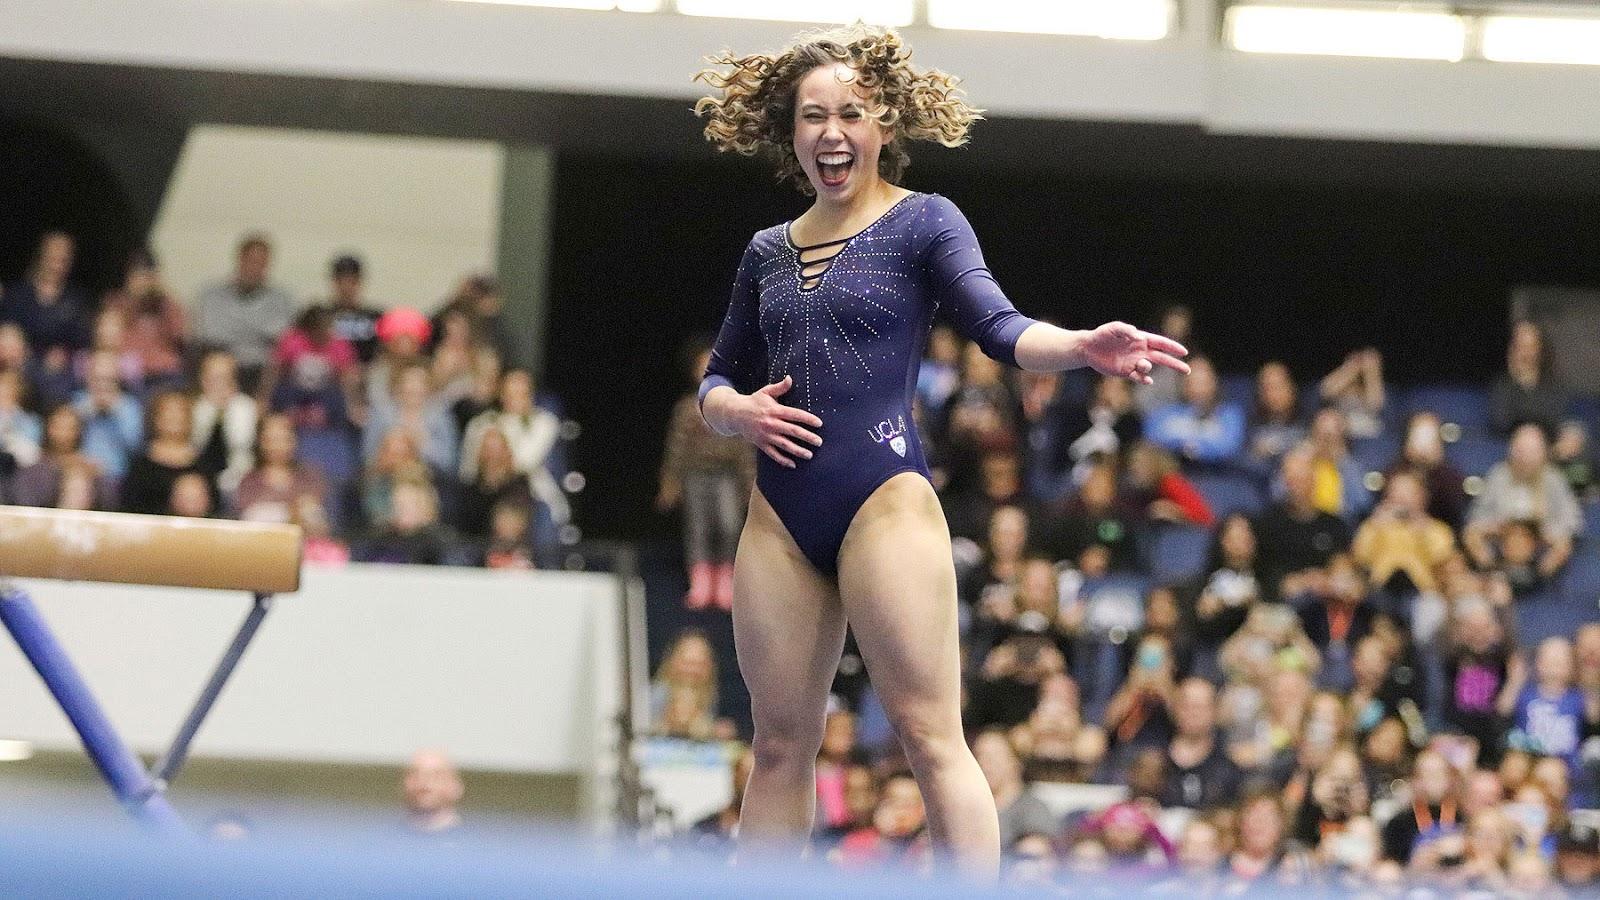 A Raramuri Living in Iowa: Katelyn Ohashi A UCLA Gymnast